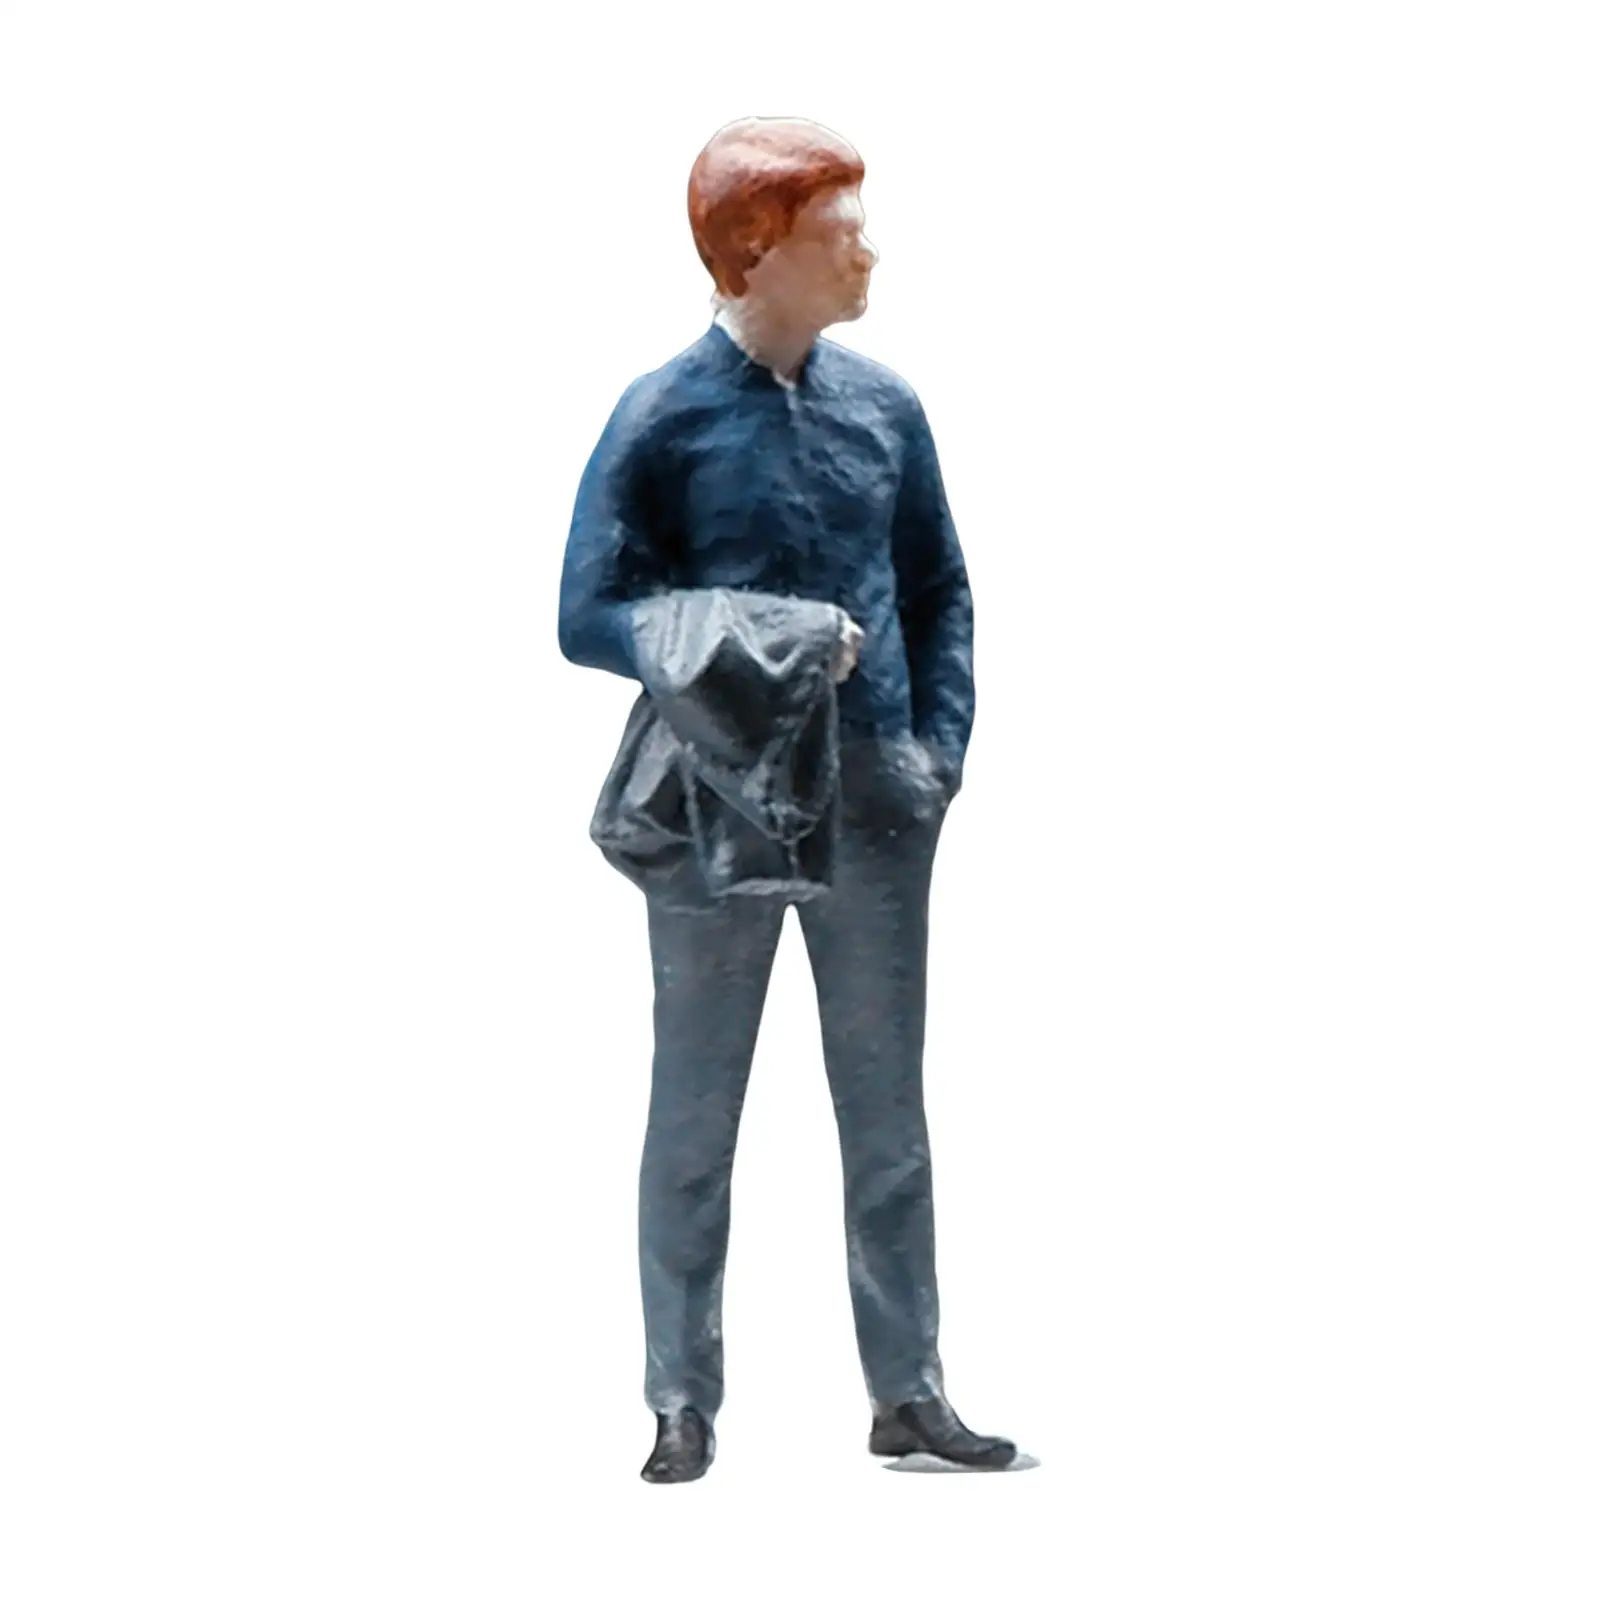 1/64 Men Figure Model S Scale Layout Trains Architectural Micro Landscape Miniature Scenes Diorama Scenery Resin Figurines Decor